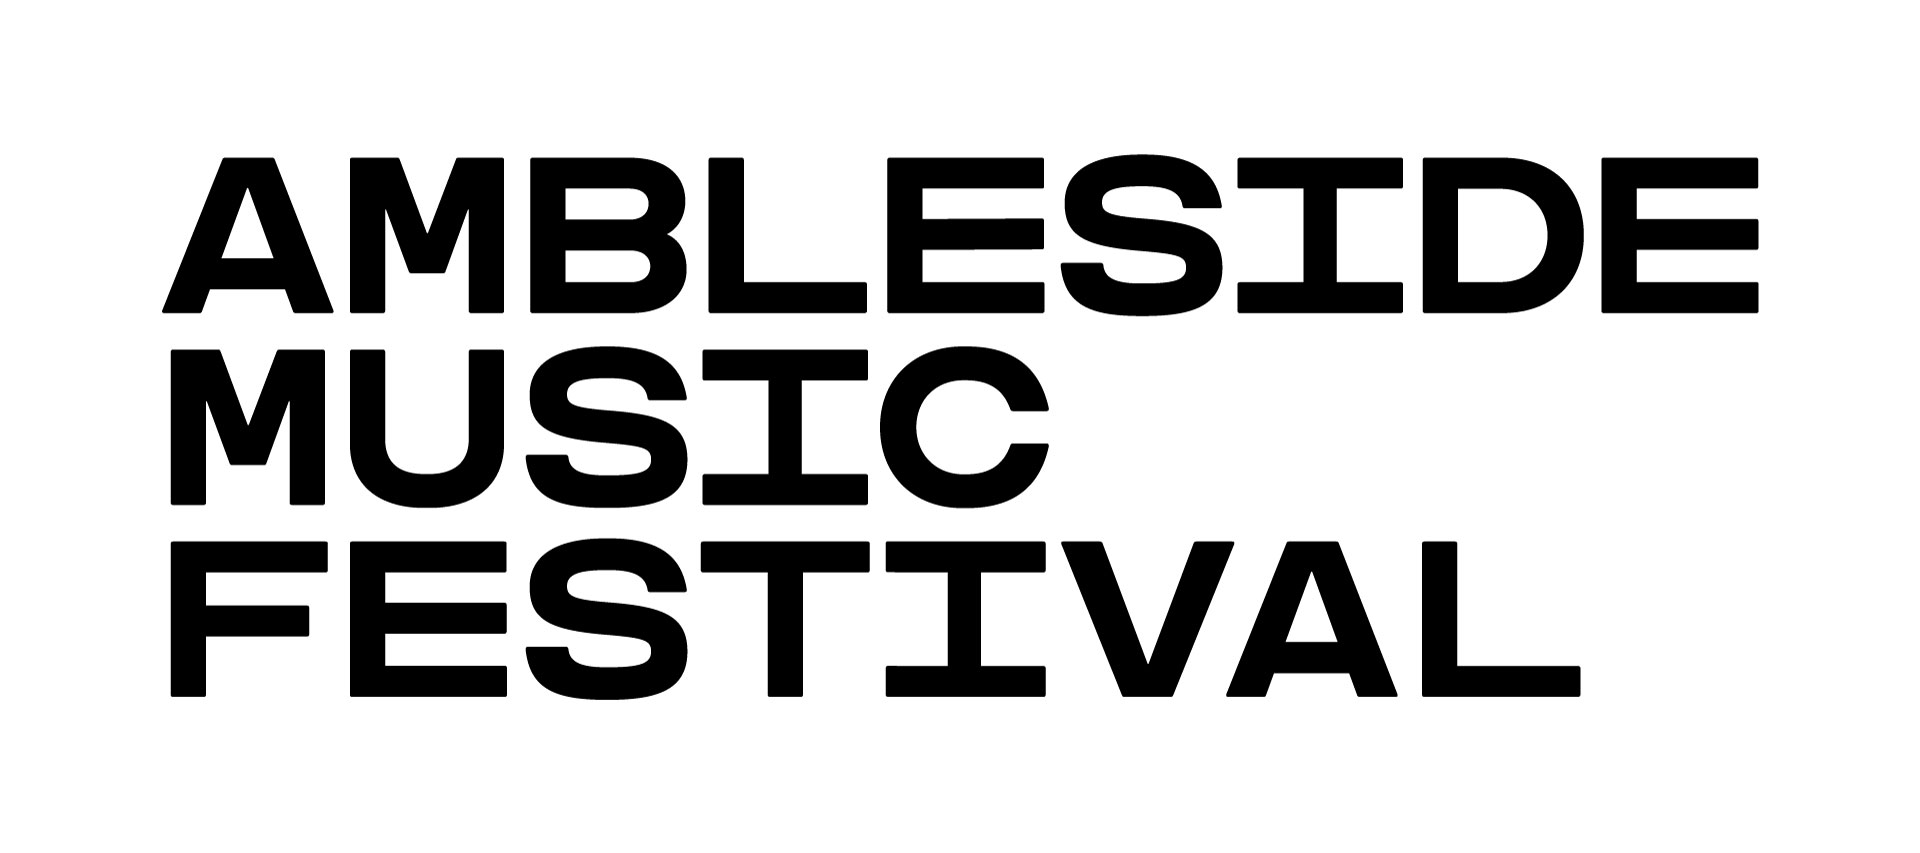 coming soon - Ambleside Music Festival